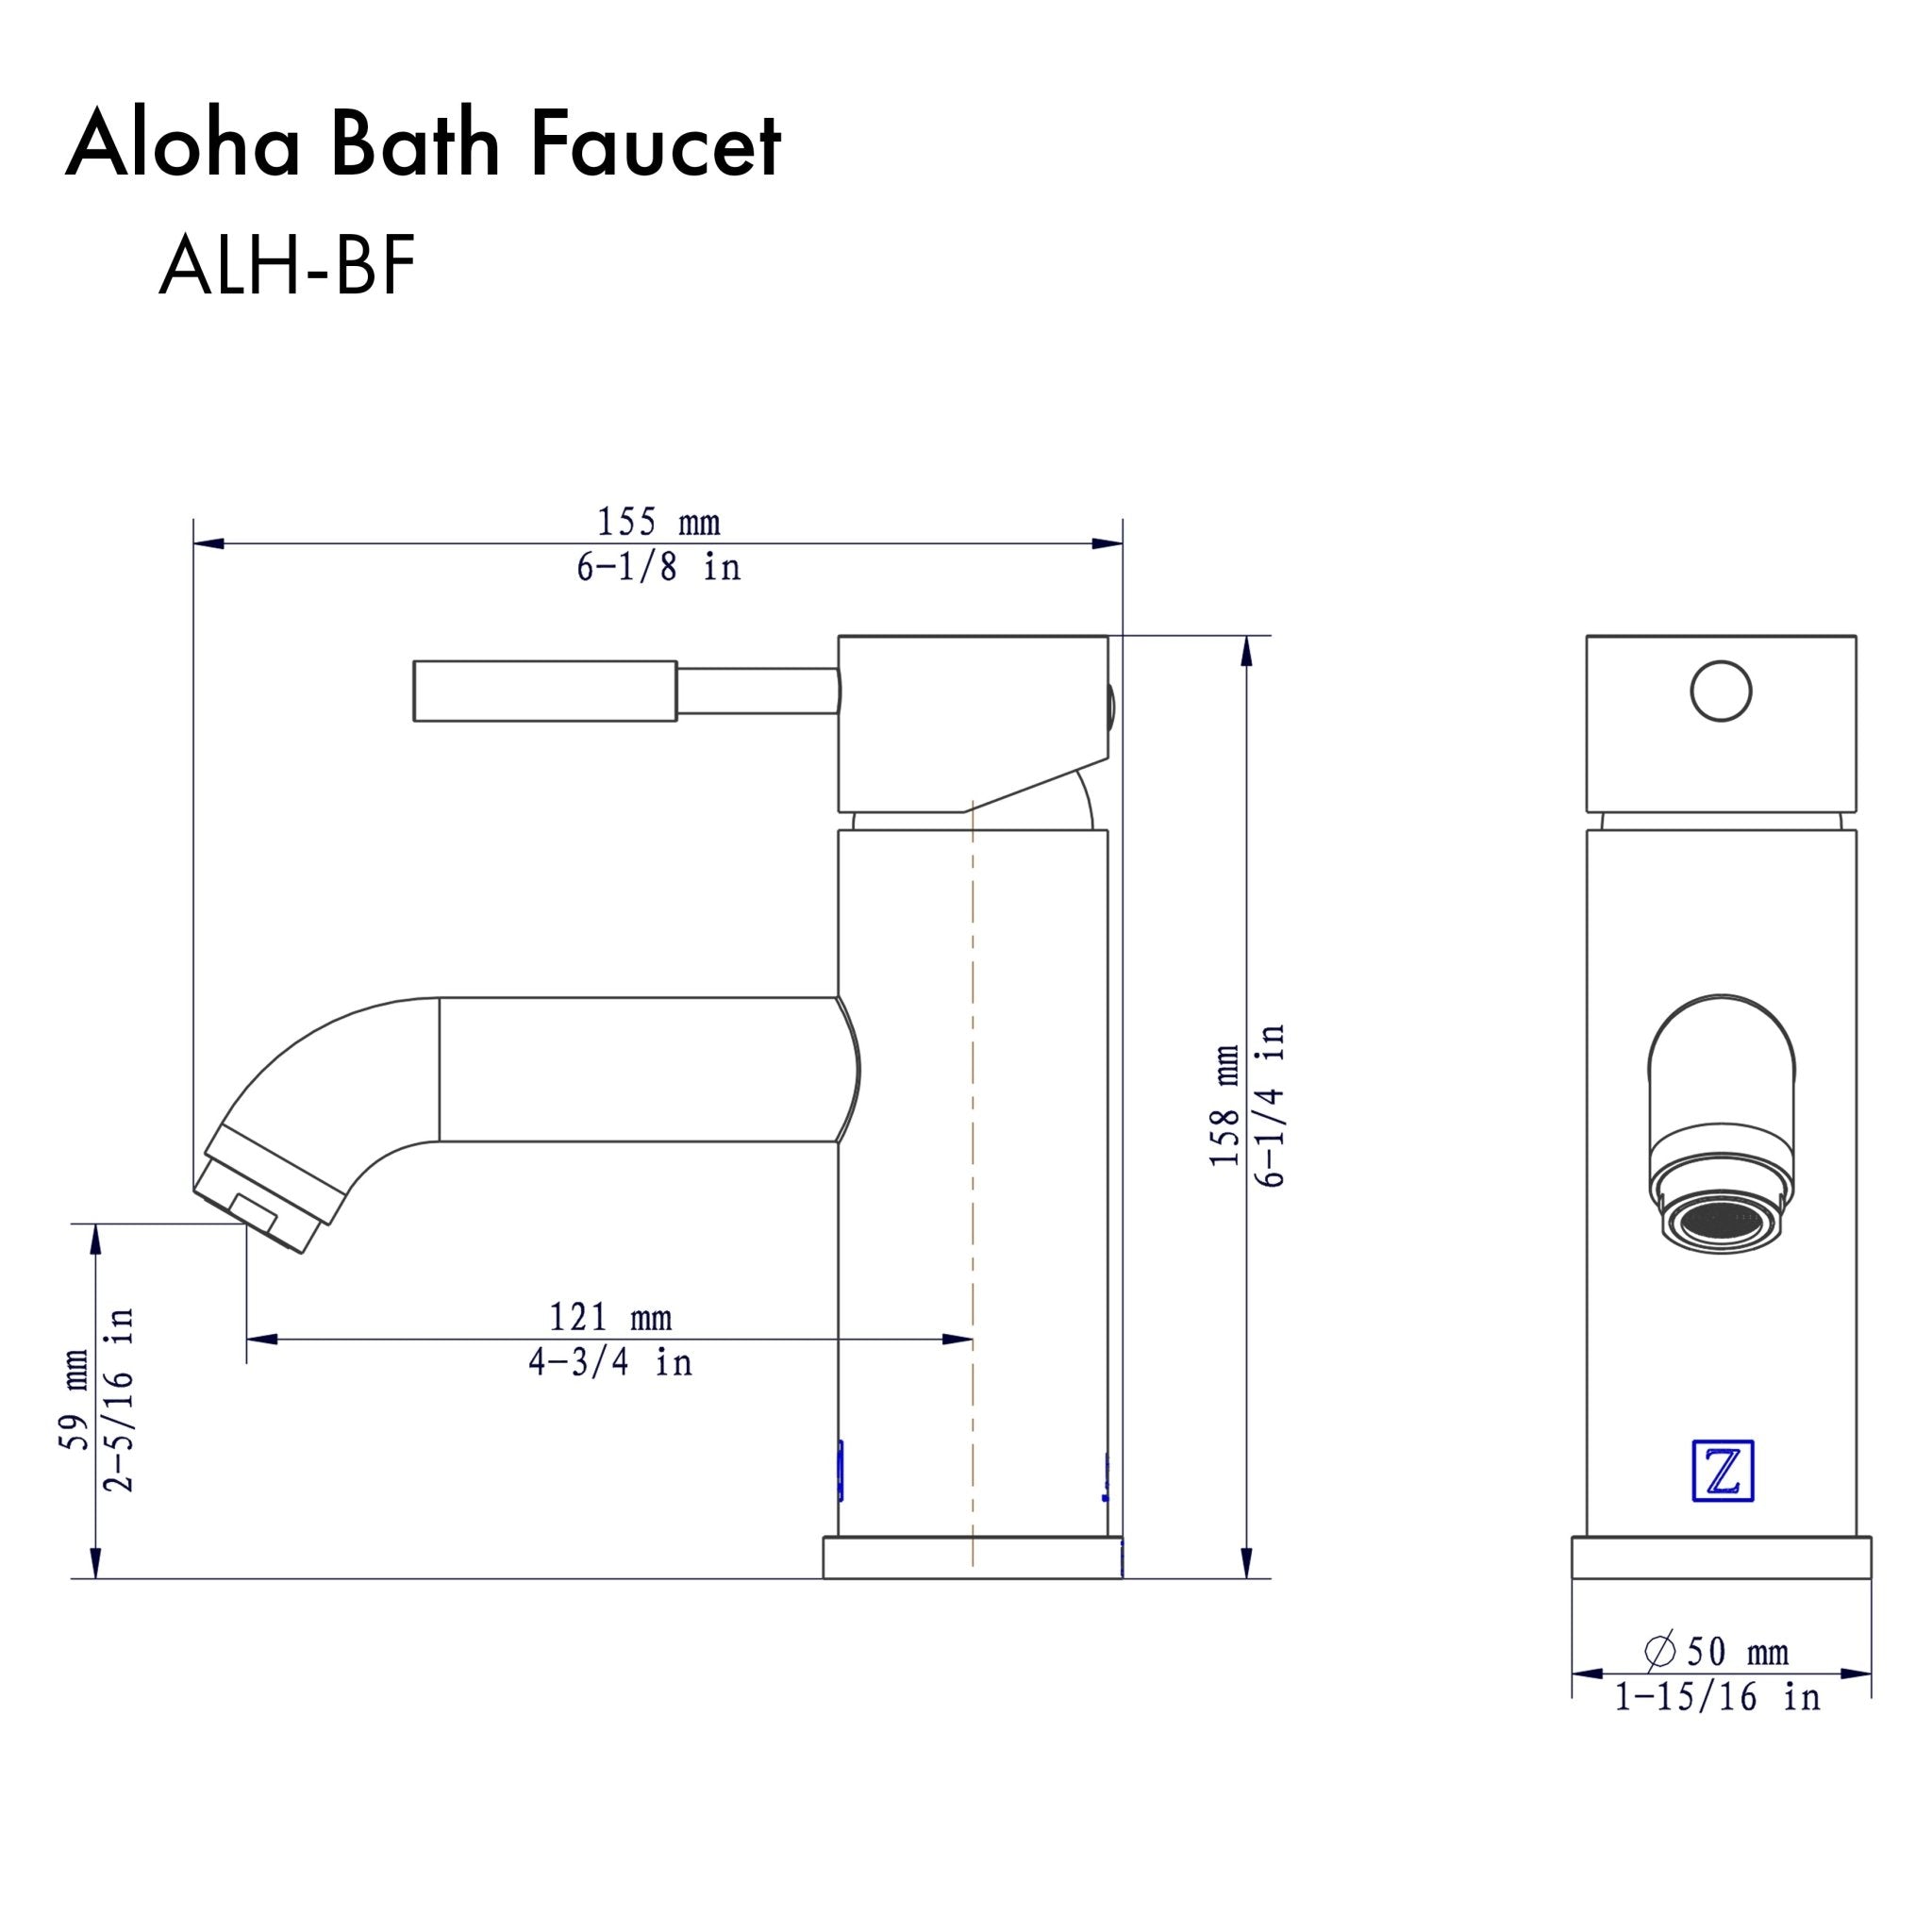 ZLINE Aloha Bath Faucet in Electric Matte Black, ALH-BF-MB